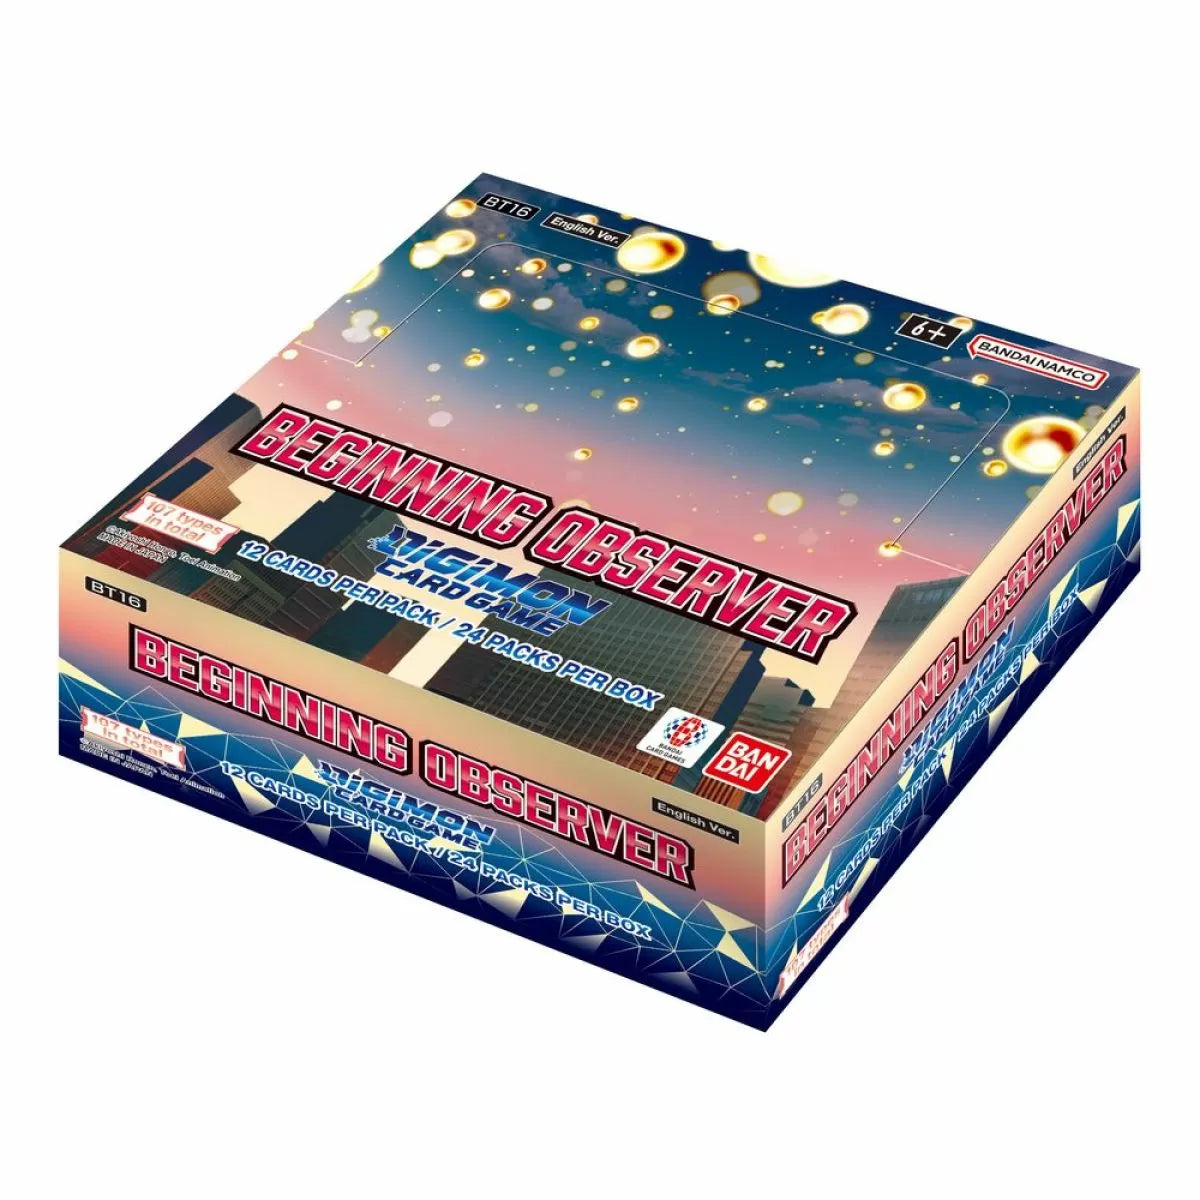 PRE ORDER - Digimon Card Game Beginning Observer Booster Box [BT16]